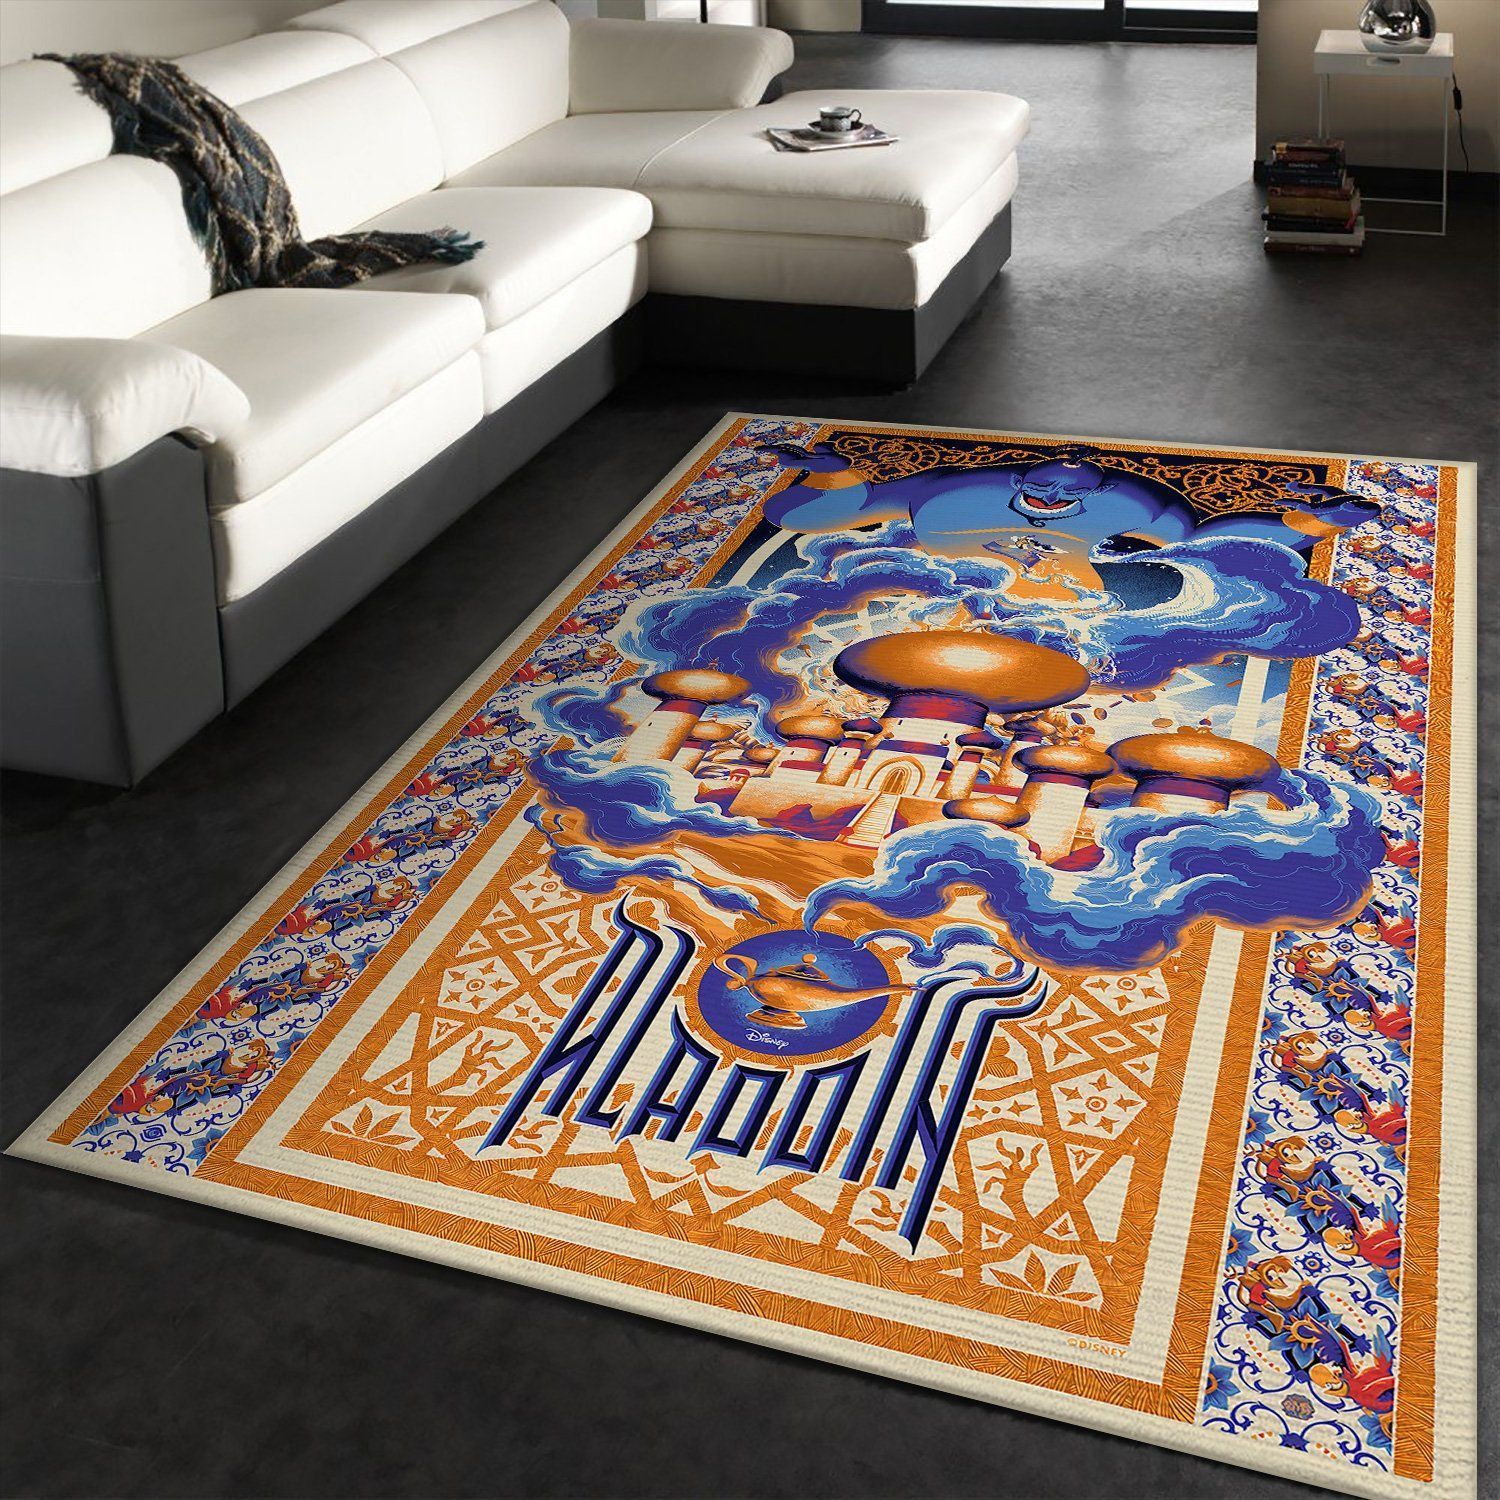 Aladdin Disney Movies Area Rugs Living Room Carpet Floor Decor The US D cor - Indoor Outdoor Rugs